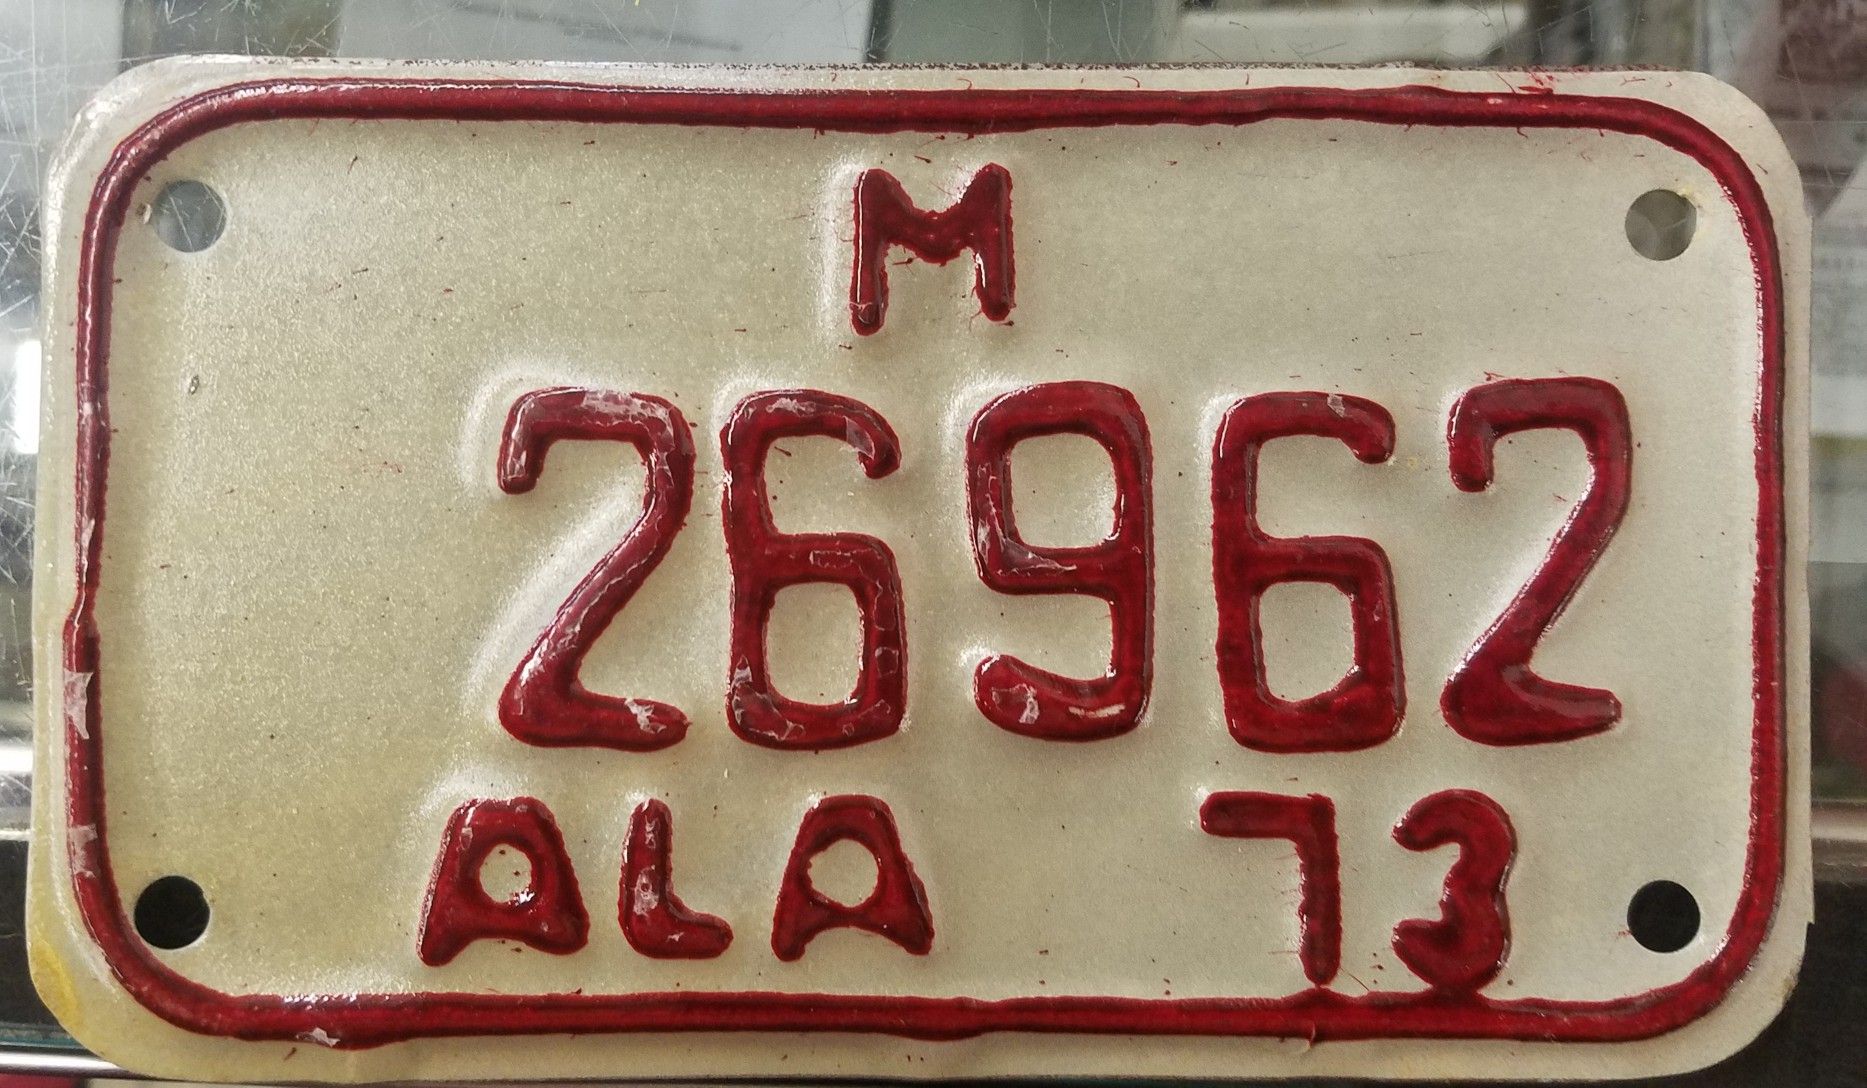 1973 Alabama Motorcycle license plate